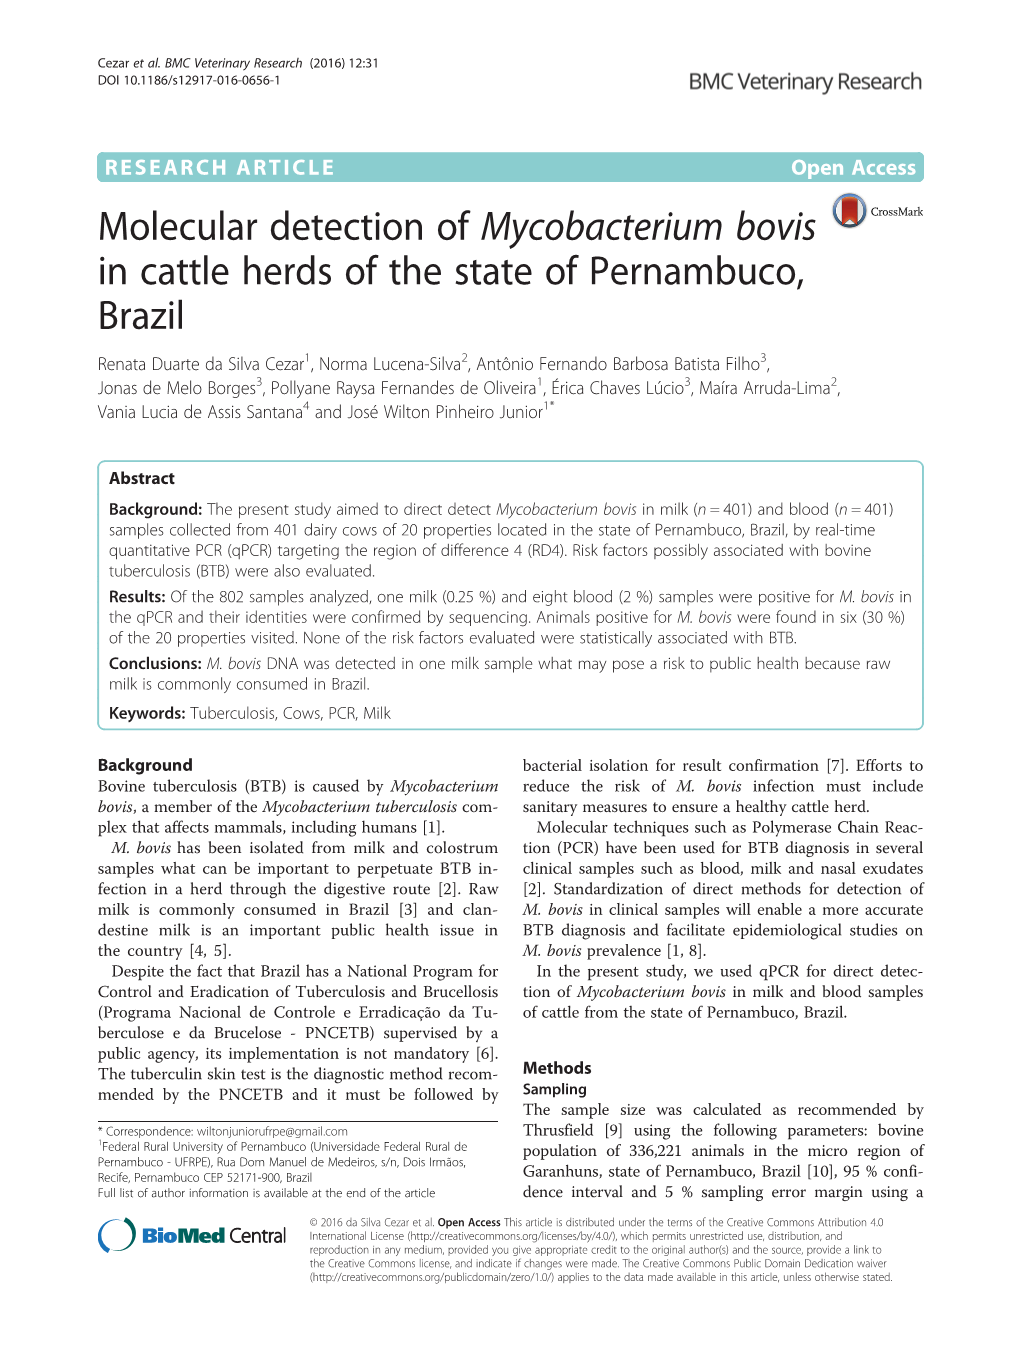 Mycobacterium Bovis